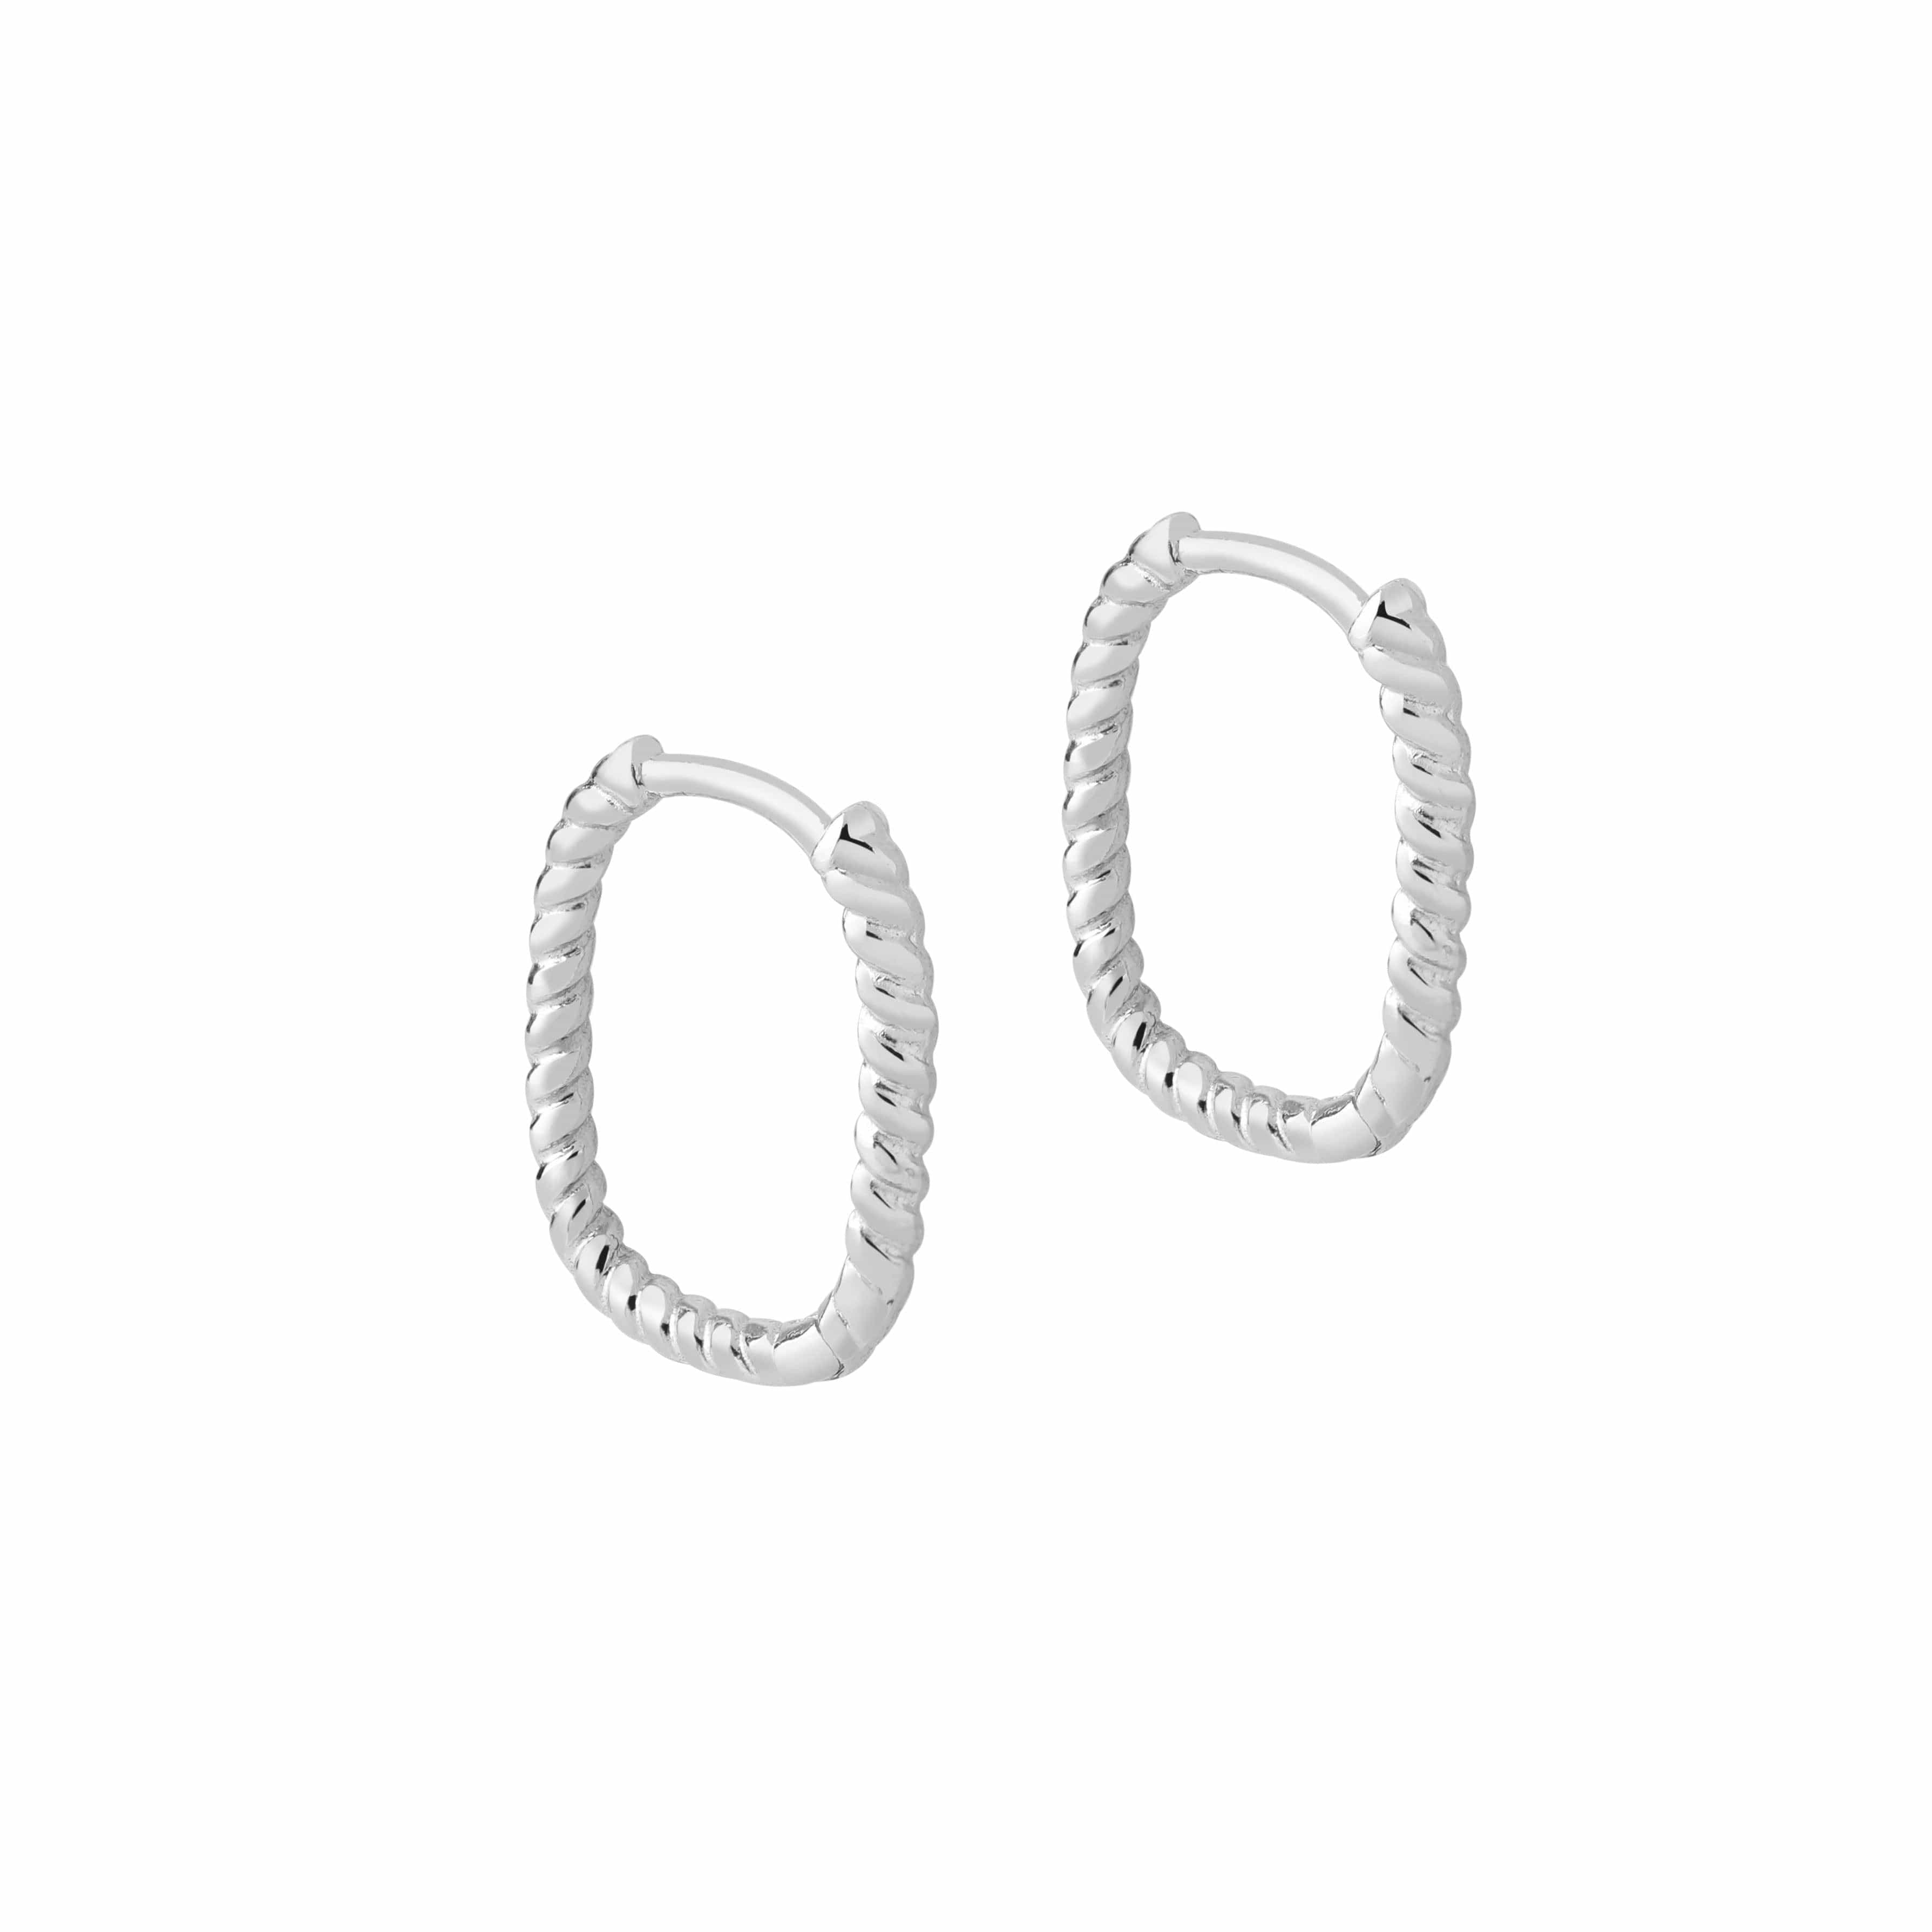 Rope Square Hoop Earrings Silver, oorringen met touw motief zilver